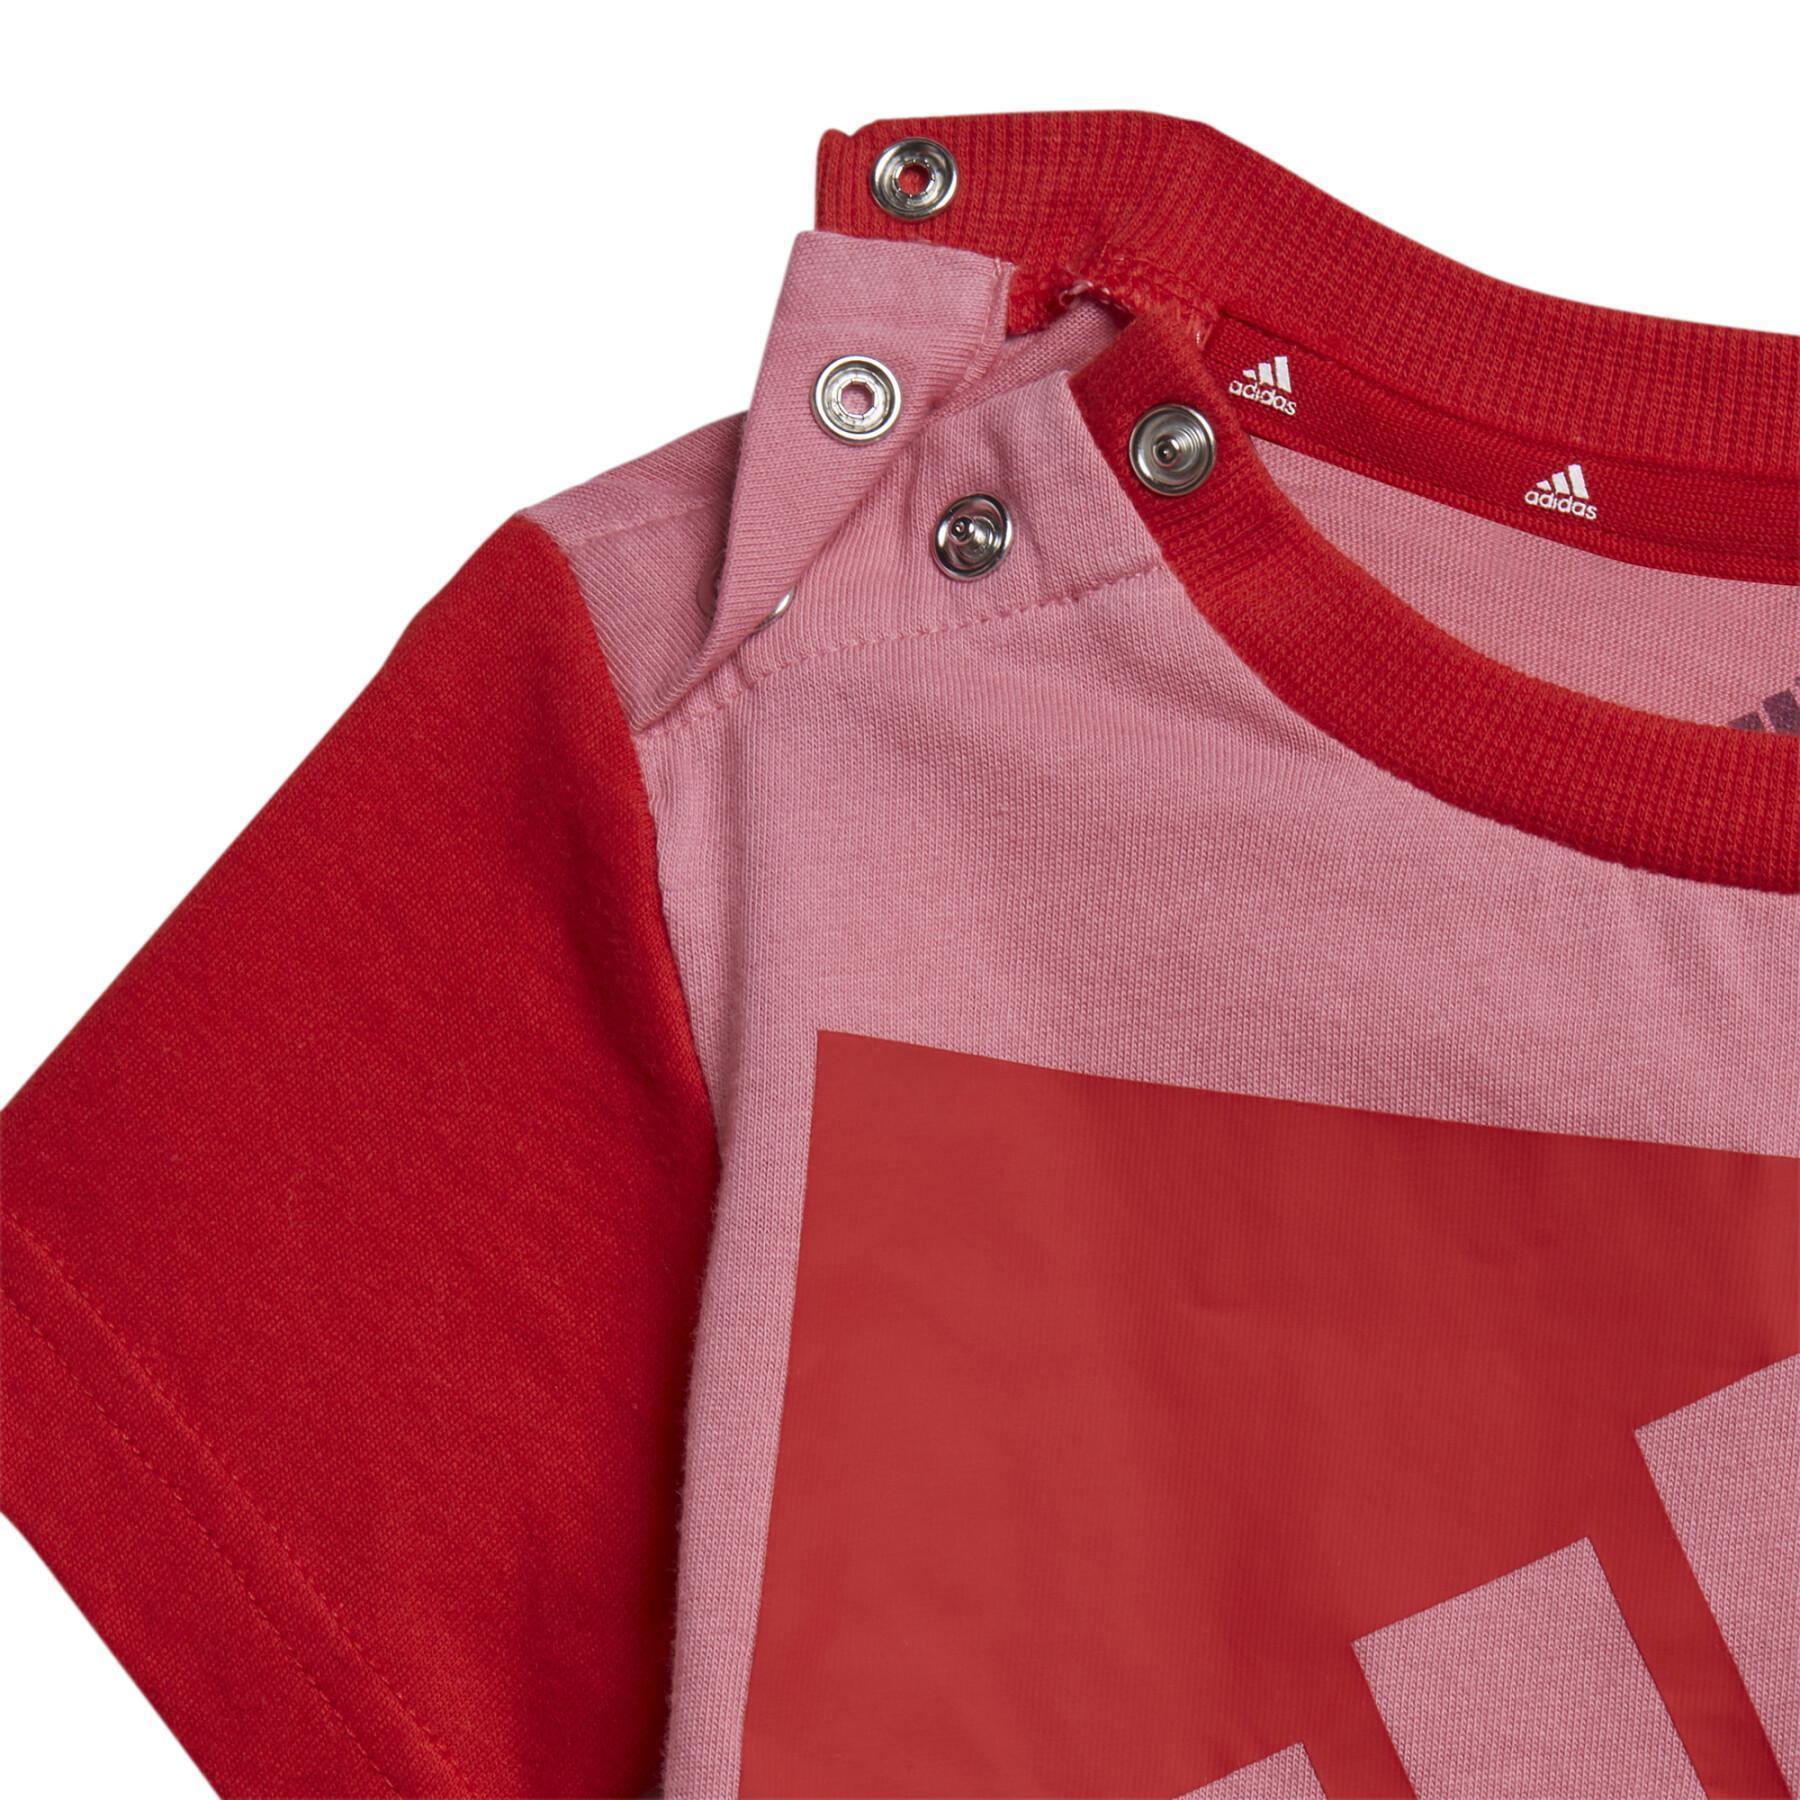 Kinder-T-Shirt-Set adidas et Essentials